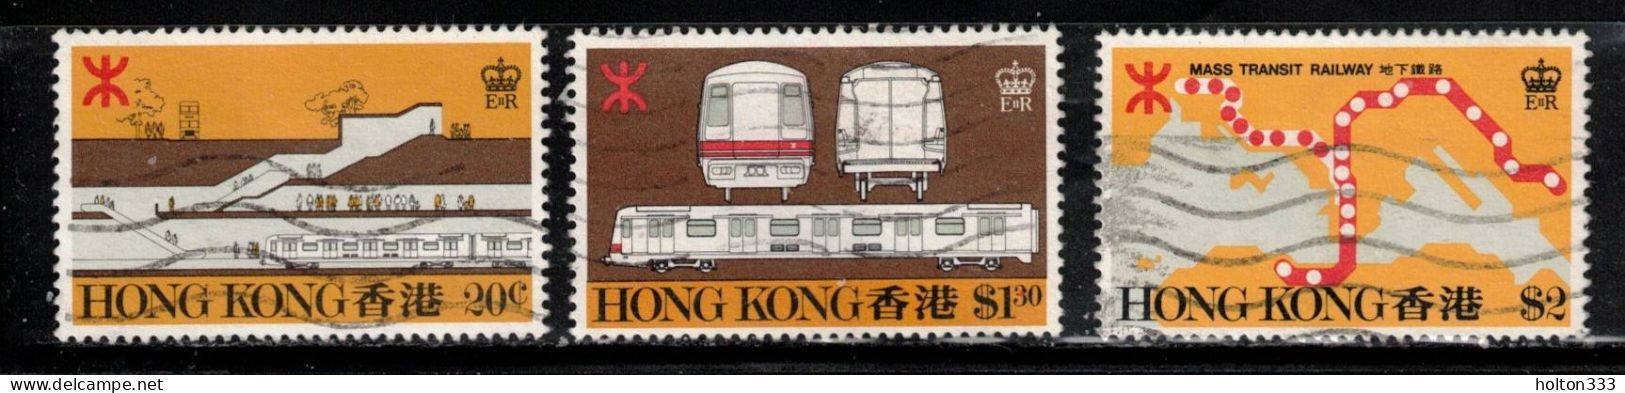 HONG KONG Scott # 358-60 Used - Hong Kong Railway - Usati